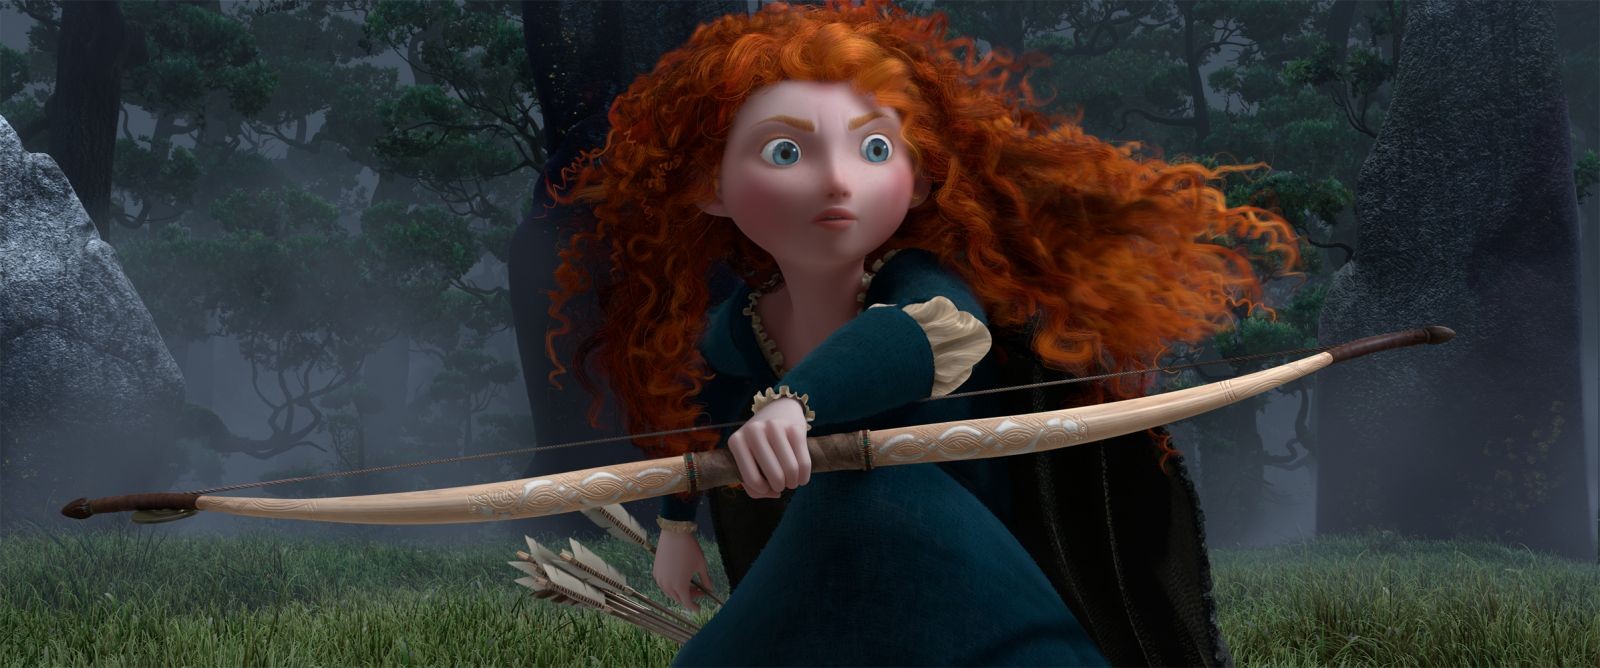 Princess Merida of Walt Disney Pictures' Brave (2012)